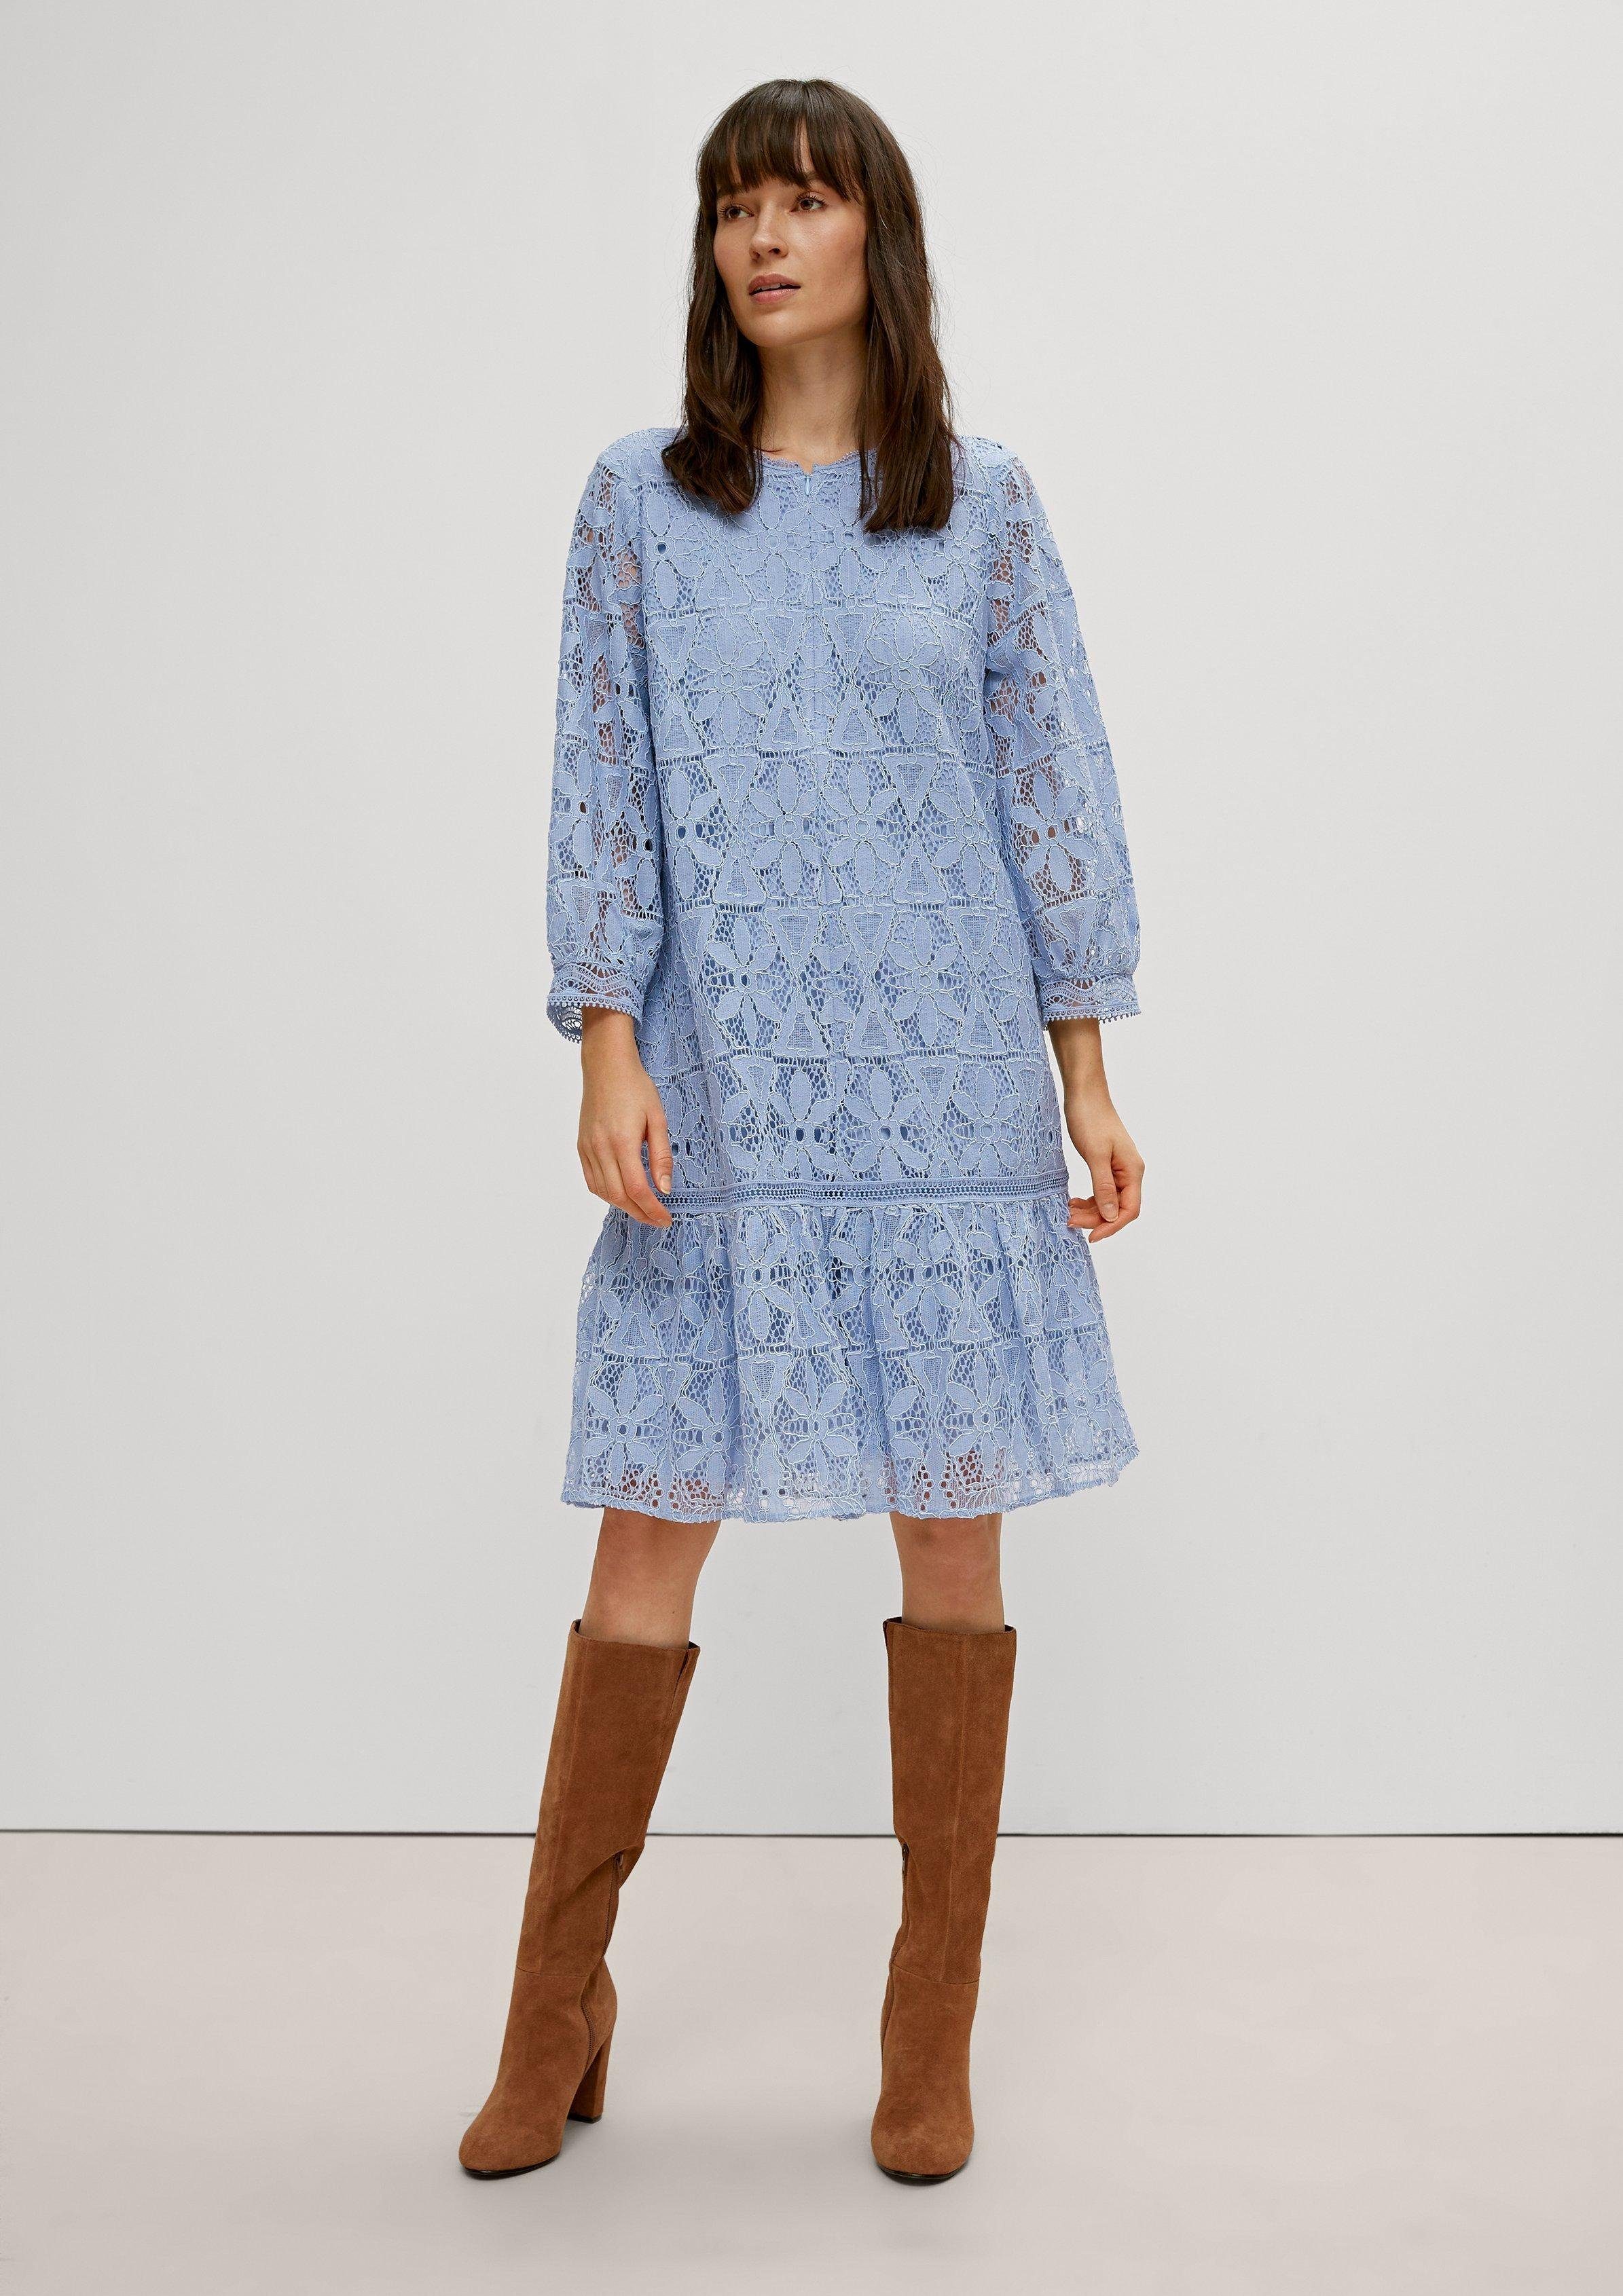 filigraner Comma aus Spitze Kleid blue sky Minikleid Kurzes